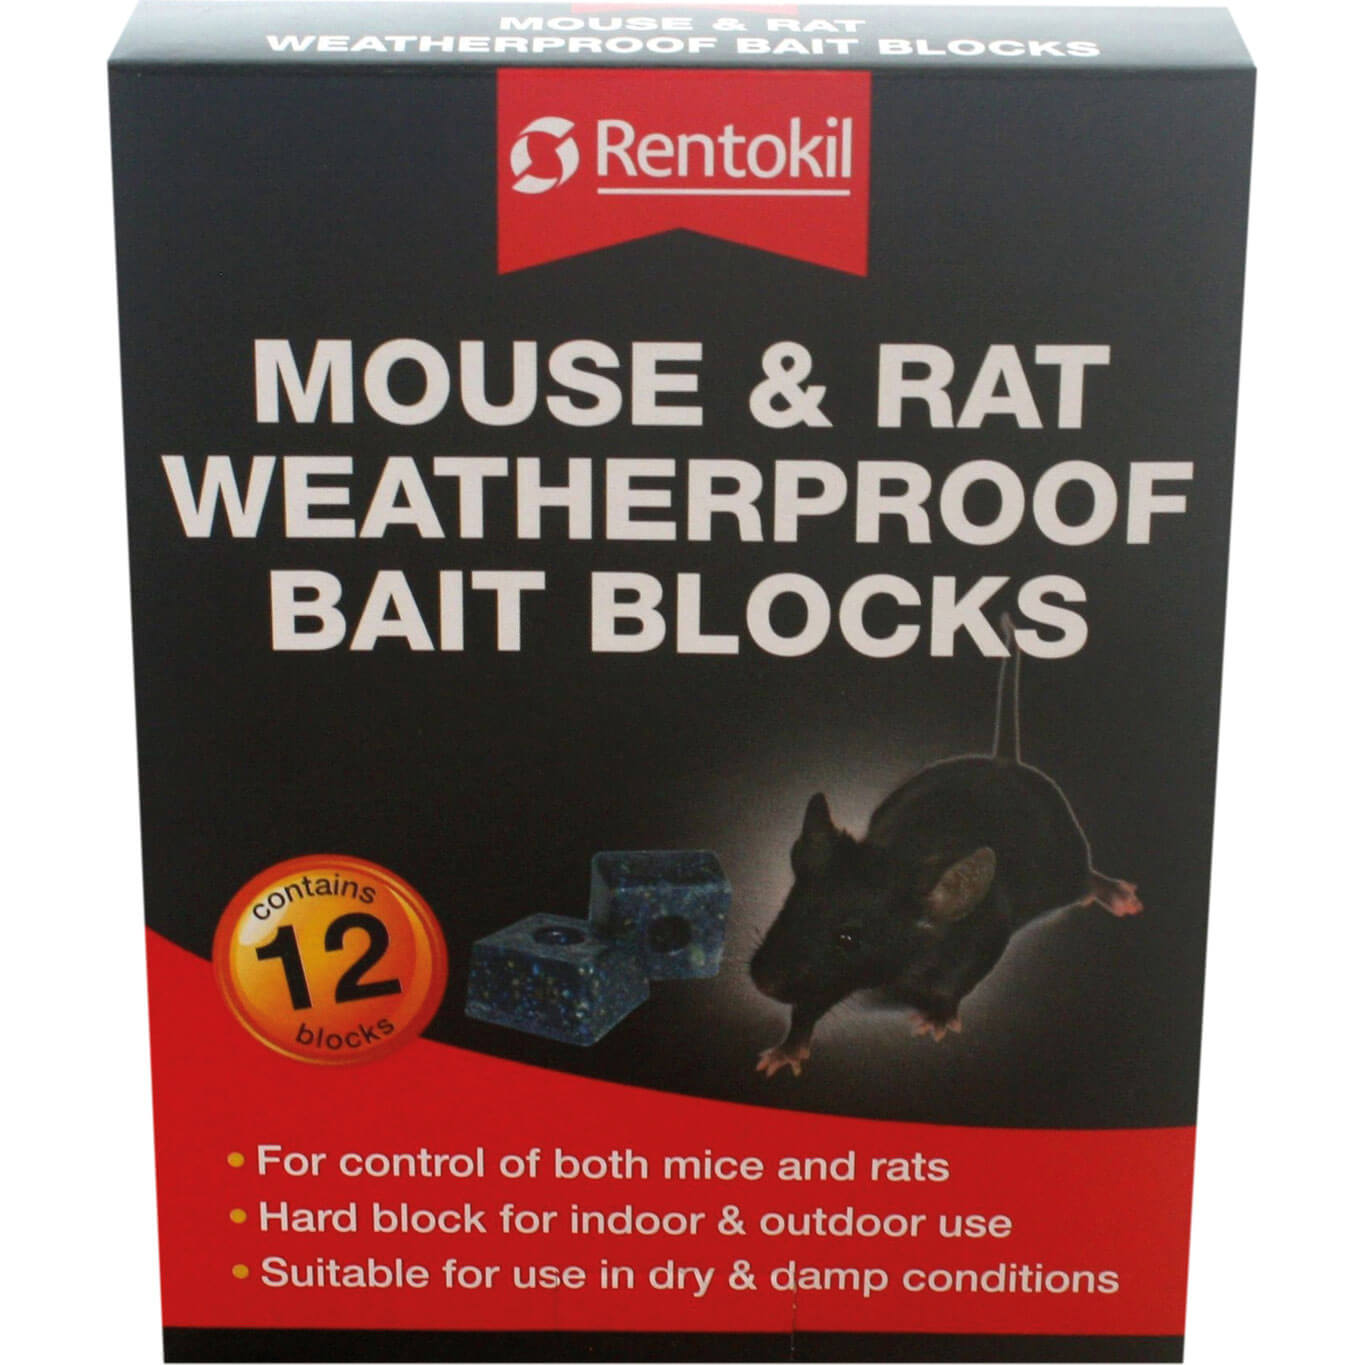 Rentokil Mouse and Rat Weatherproof Bait Blocks